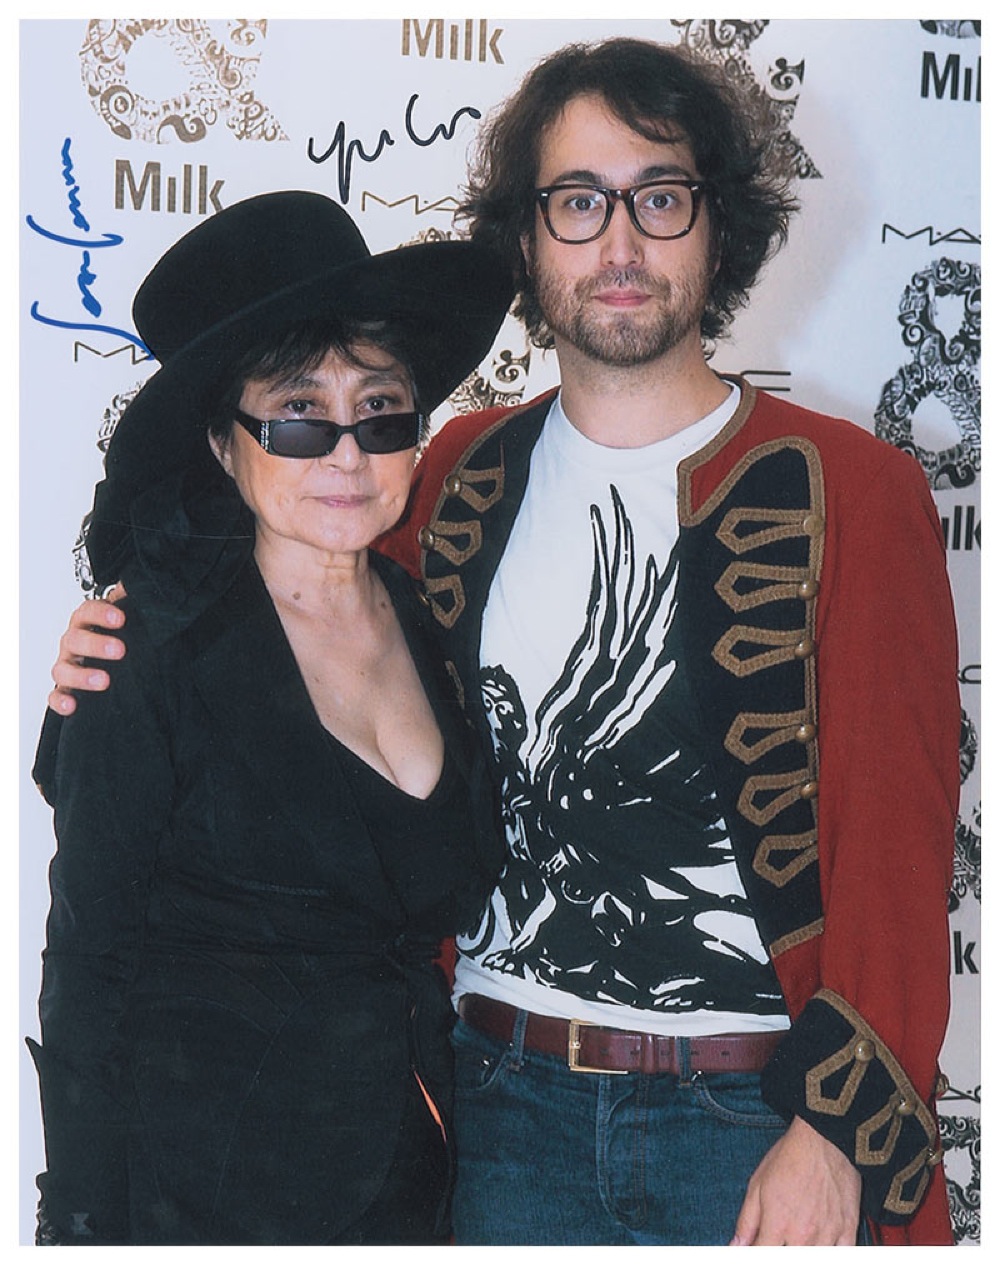 Lot #916 Yoko Ono and Sean Lennon